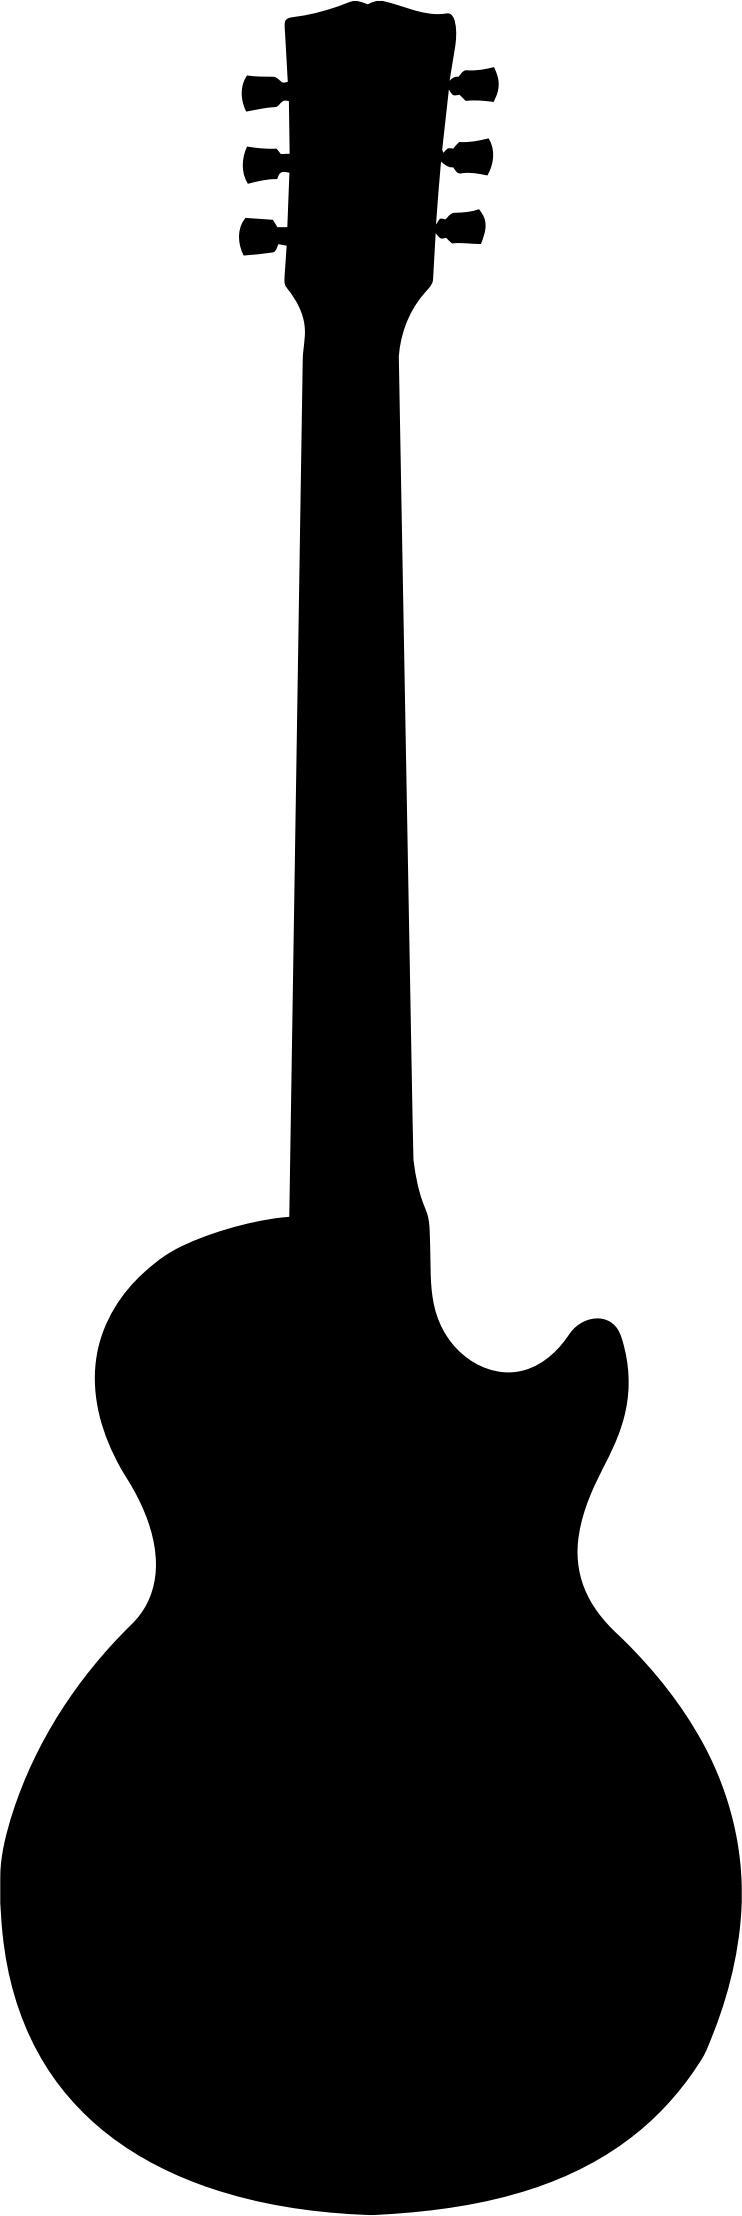 Guitar silhouette png transparent